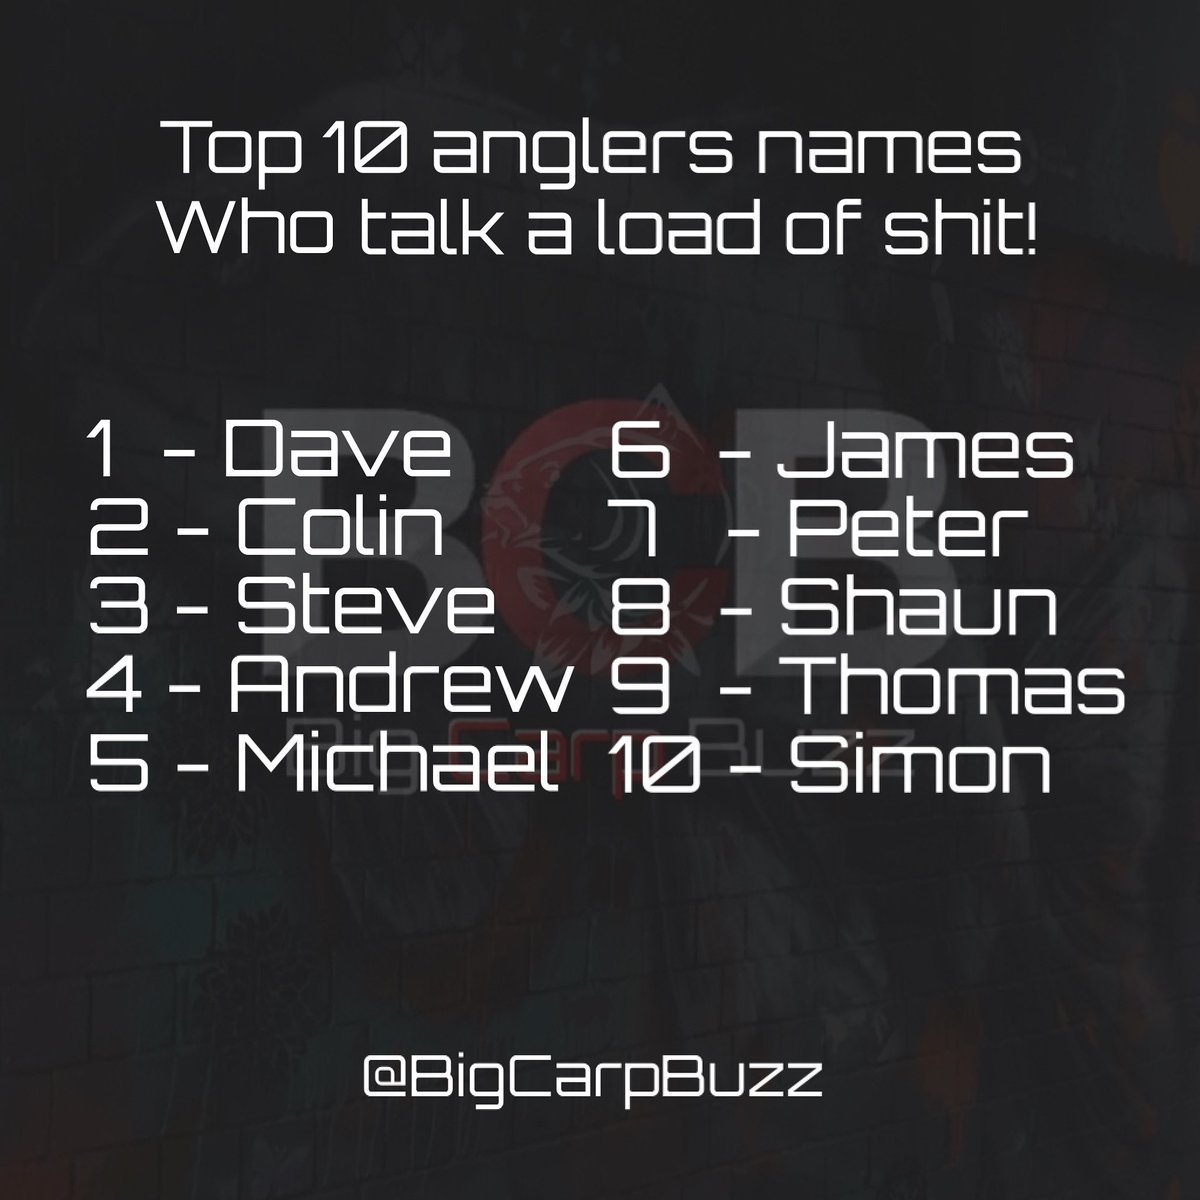 Top 10 anglers names that talk a load of s<b>Hit</b>!  @BigCarpBuzz 
#BigCarpBuzz #Carp #CarpFishing